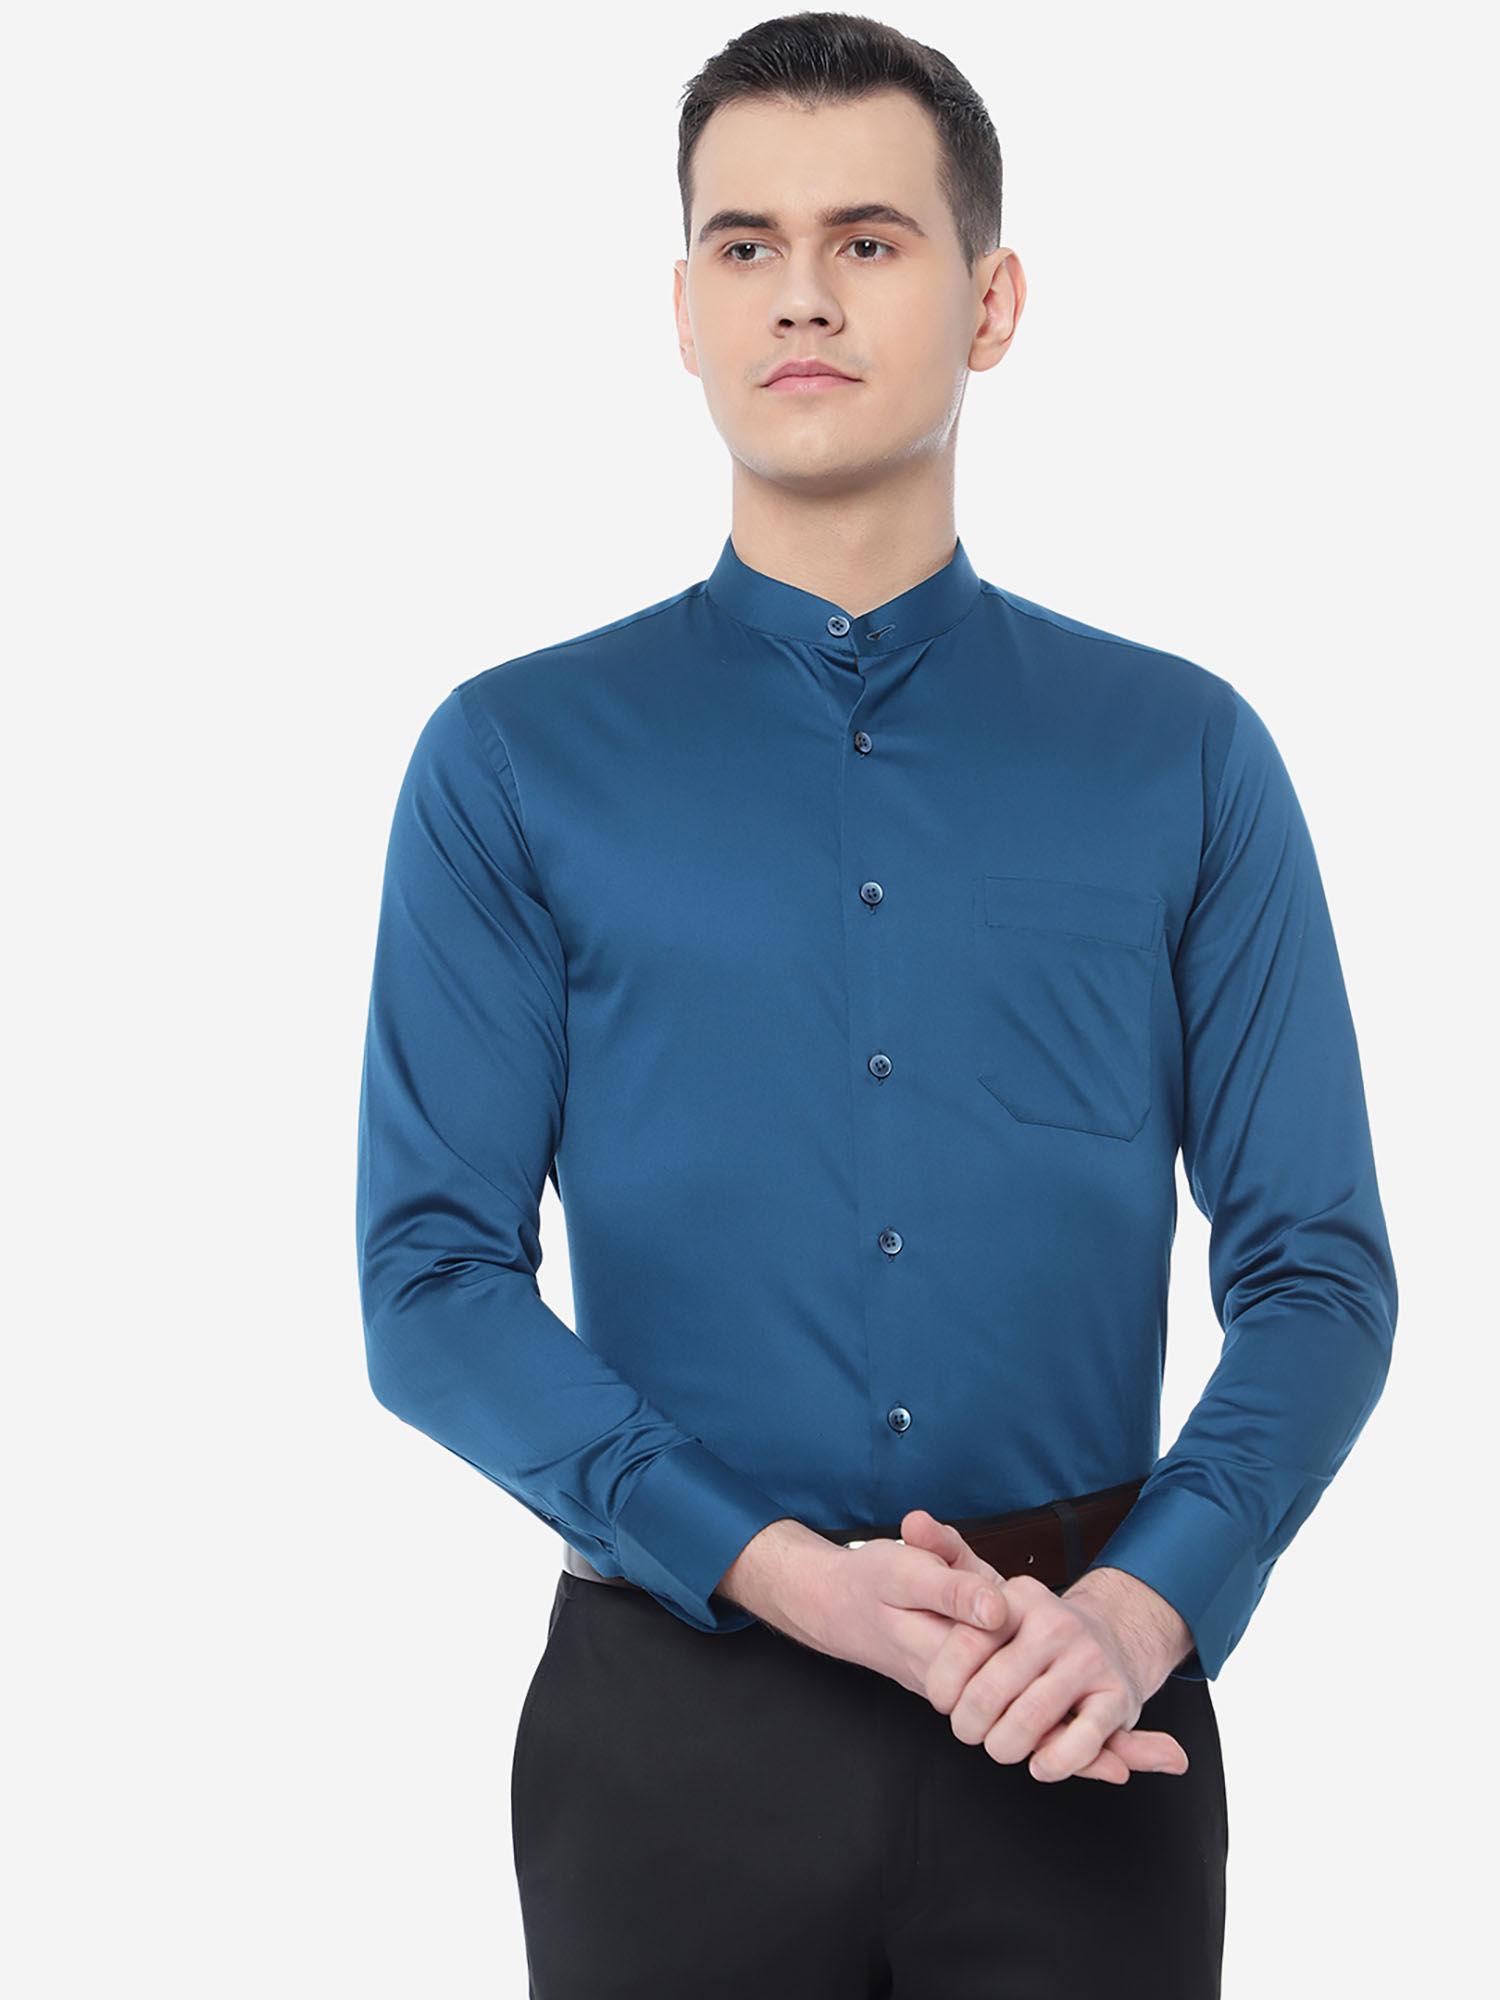 men solid peacock blue cotton slim fit formal shirt